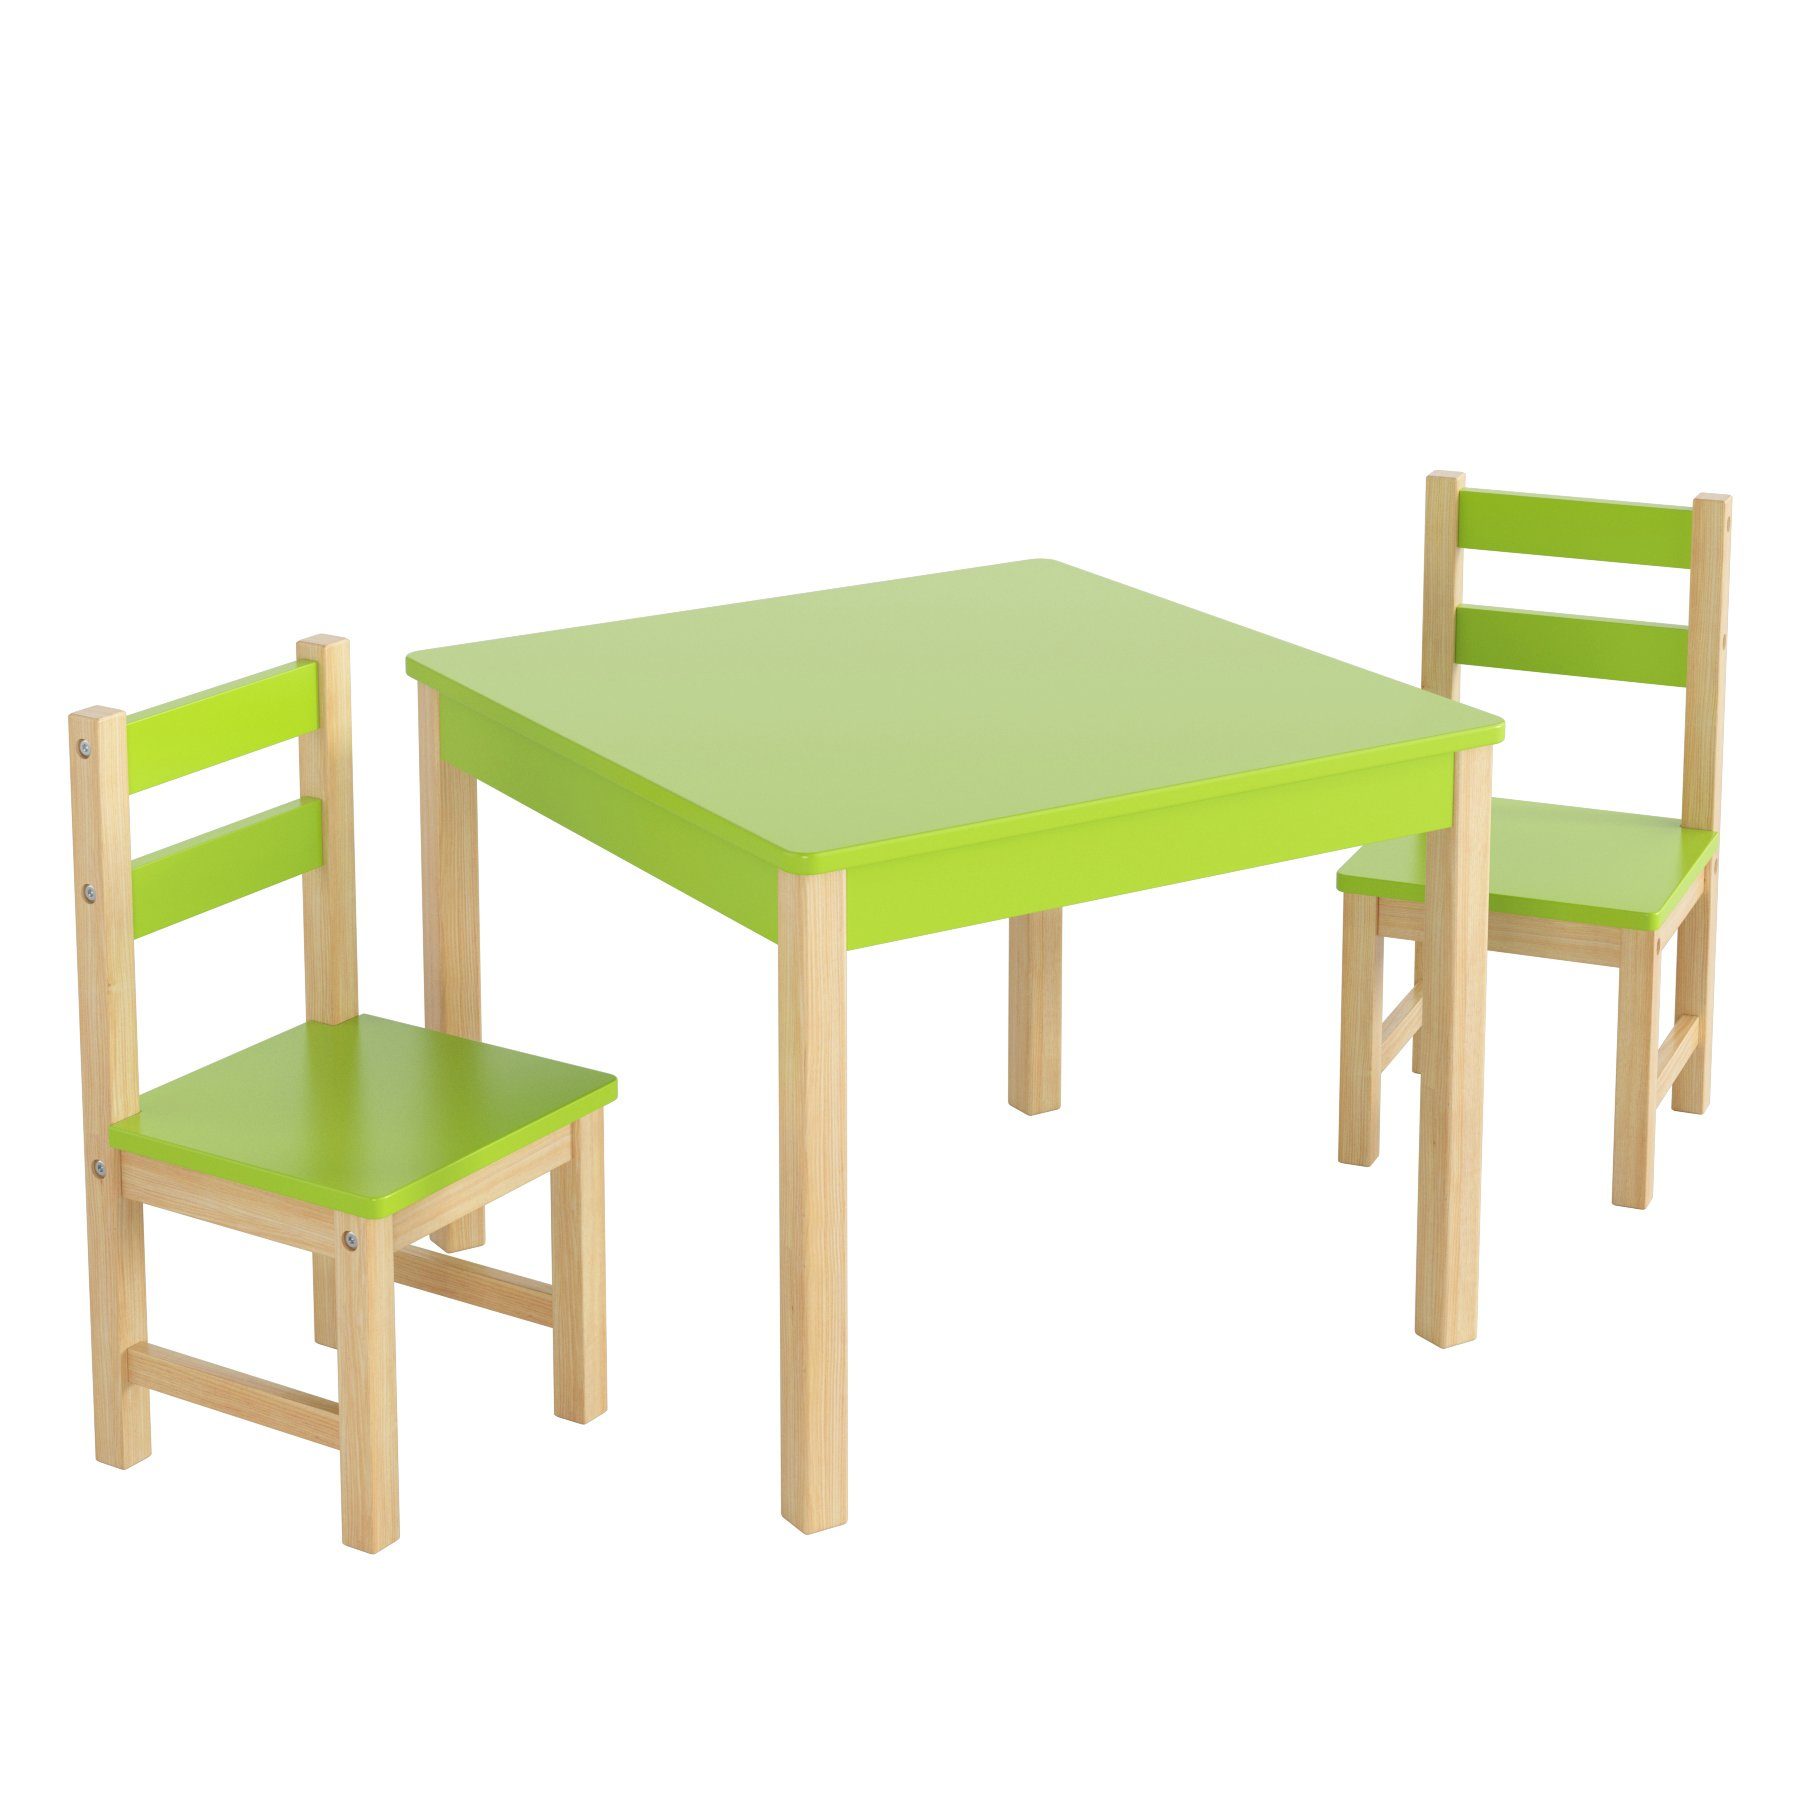 Kindersitzgruppe Tischset Kindermöbel Kindertisch Kinderstuhl Holz XXL 